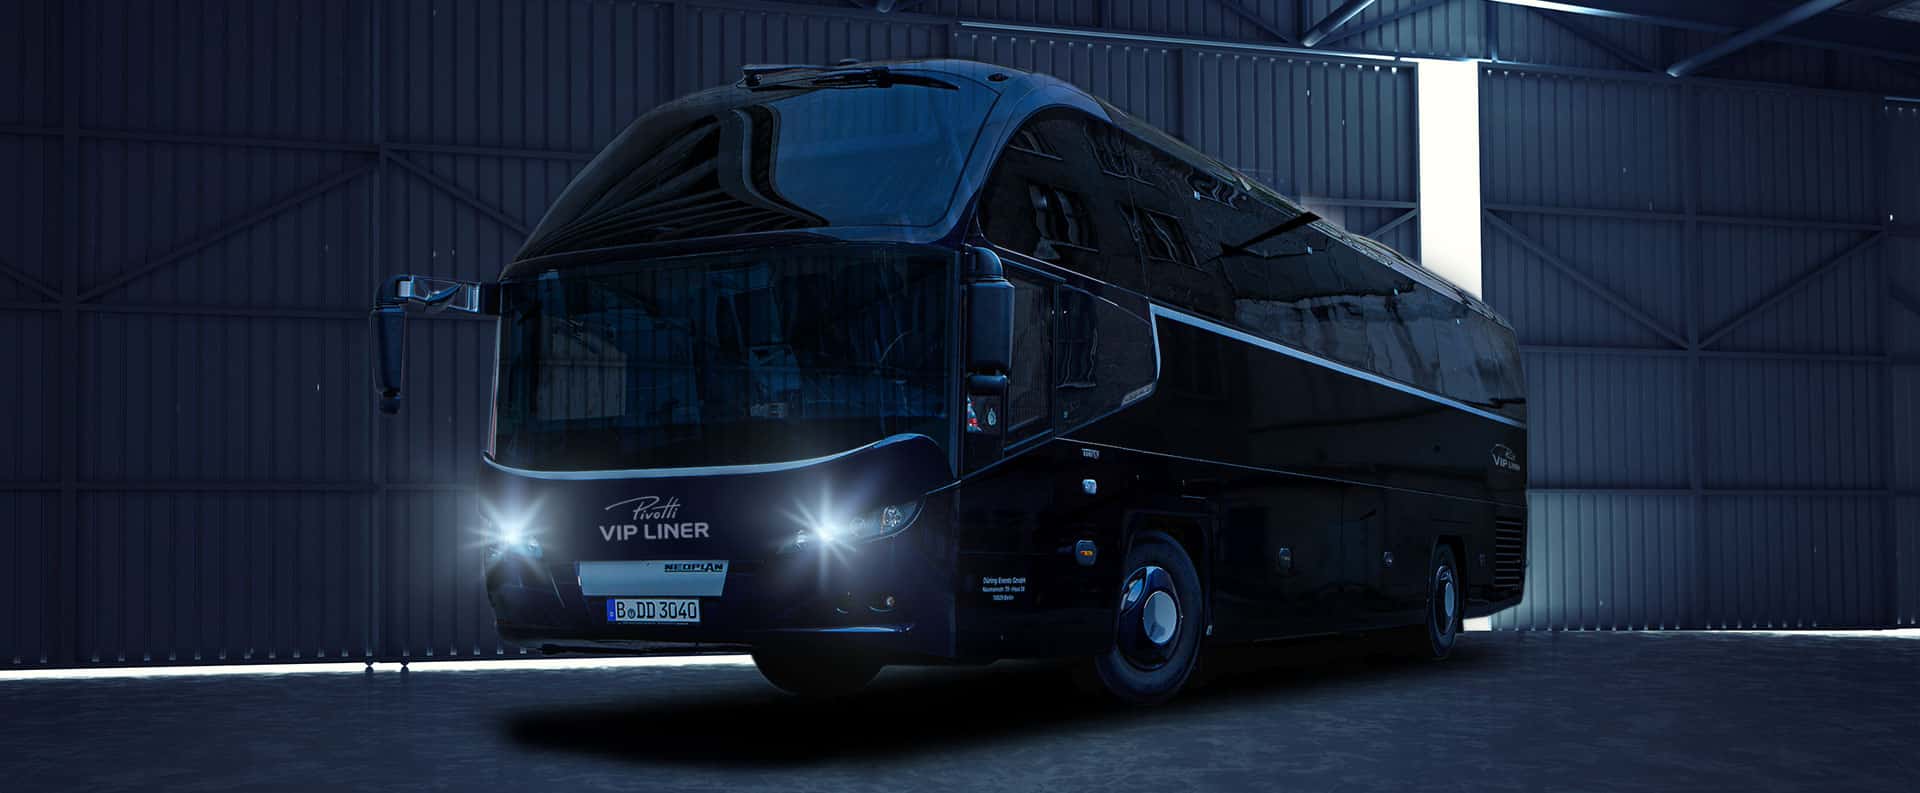 Grosser Reisebus VIP Cityliner mit Fahrer mieten bei Pivotti VIP Liner Berlin